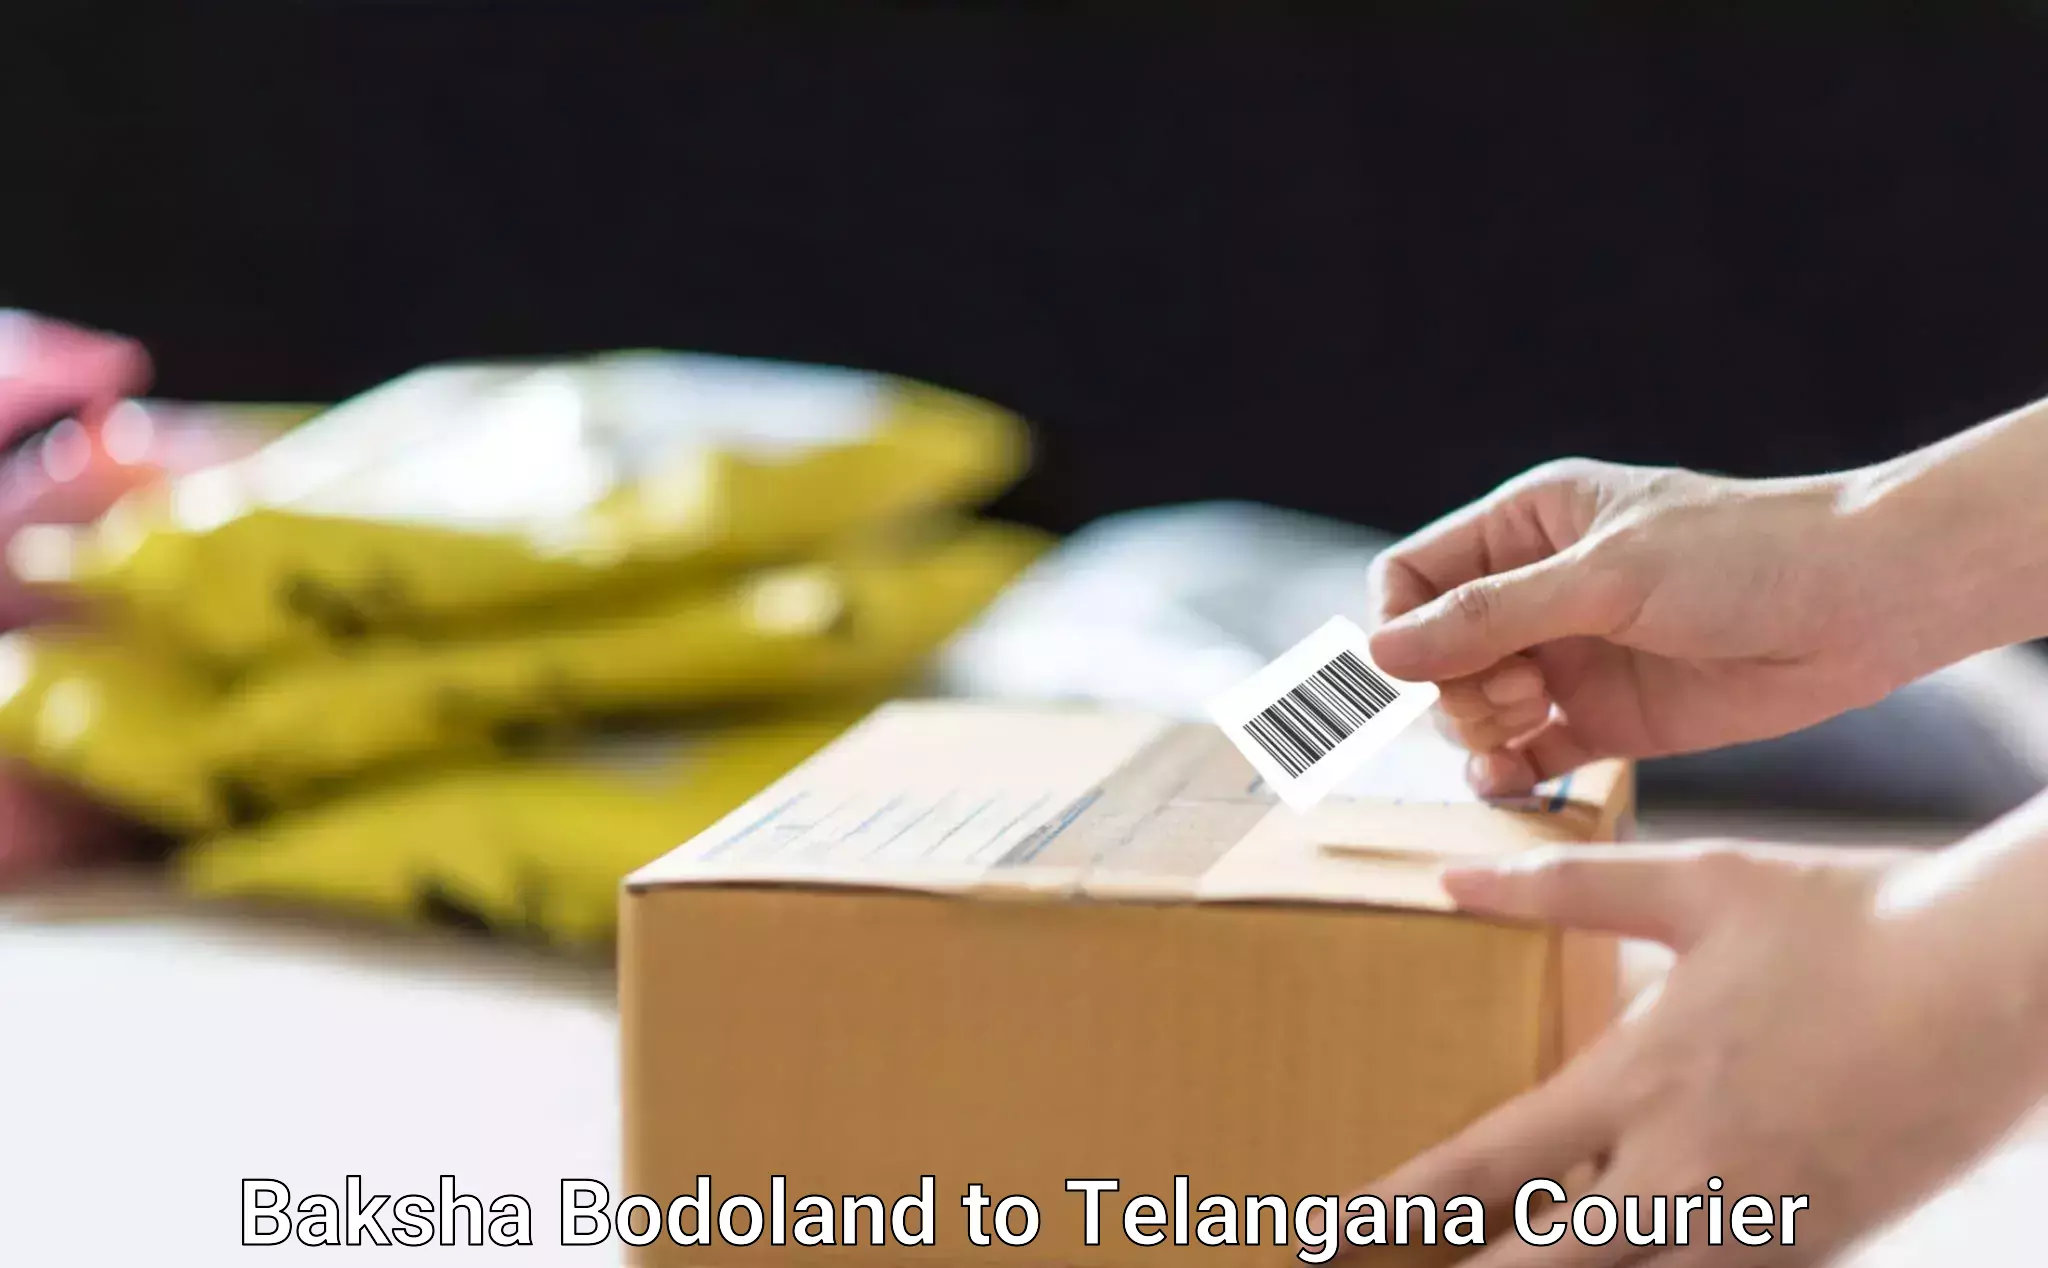 Efficient parcel service Baksha Bodoland to Sikanderguda